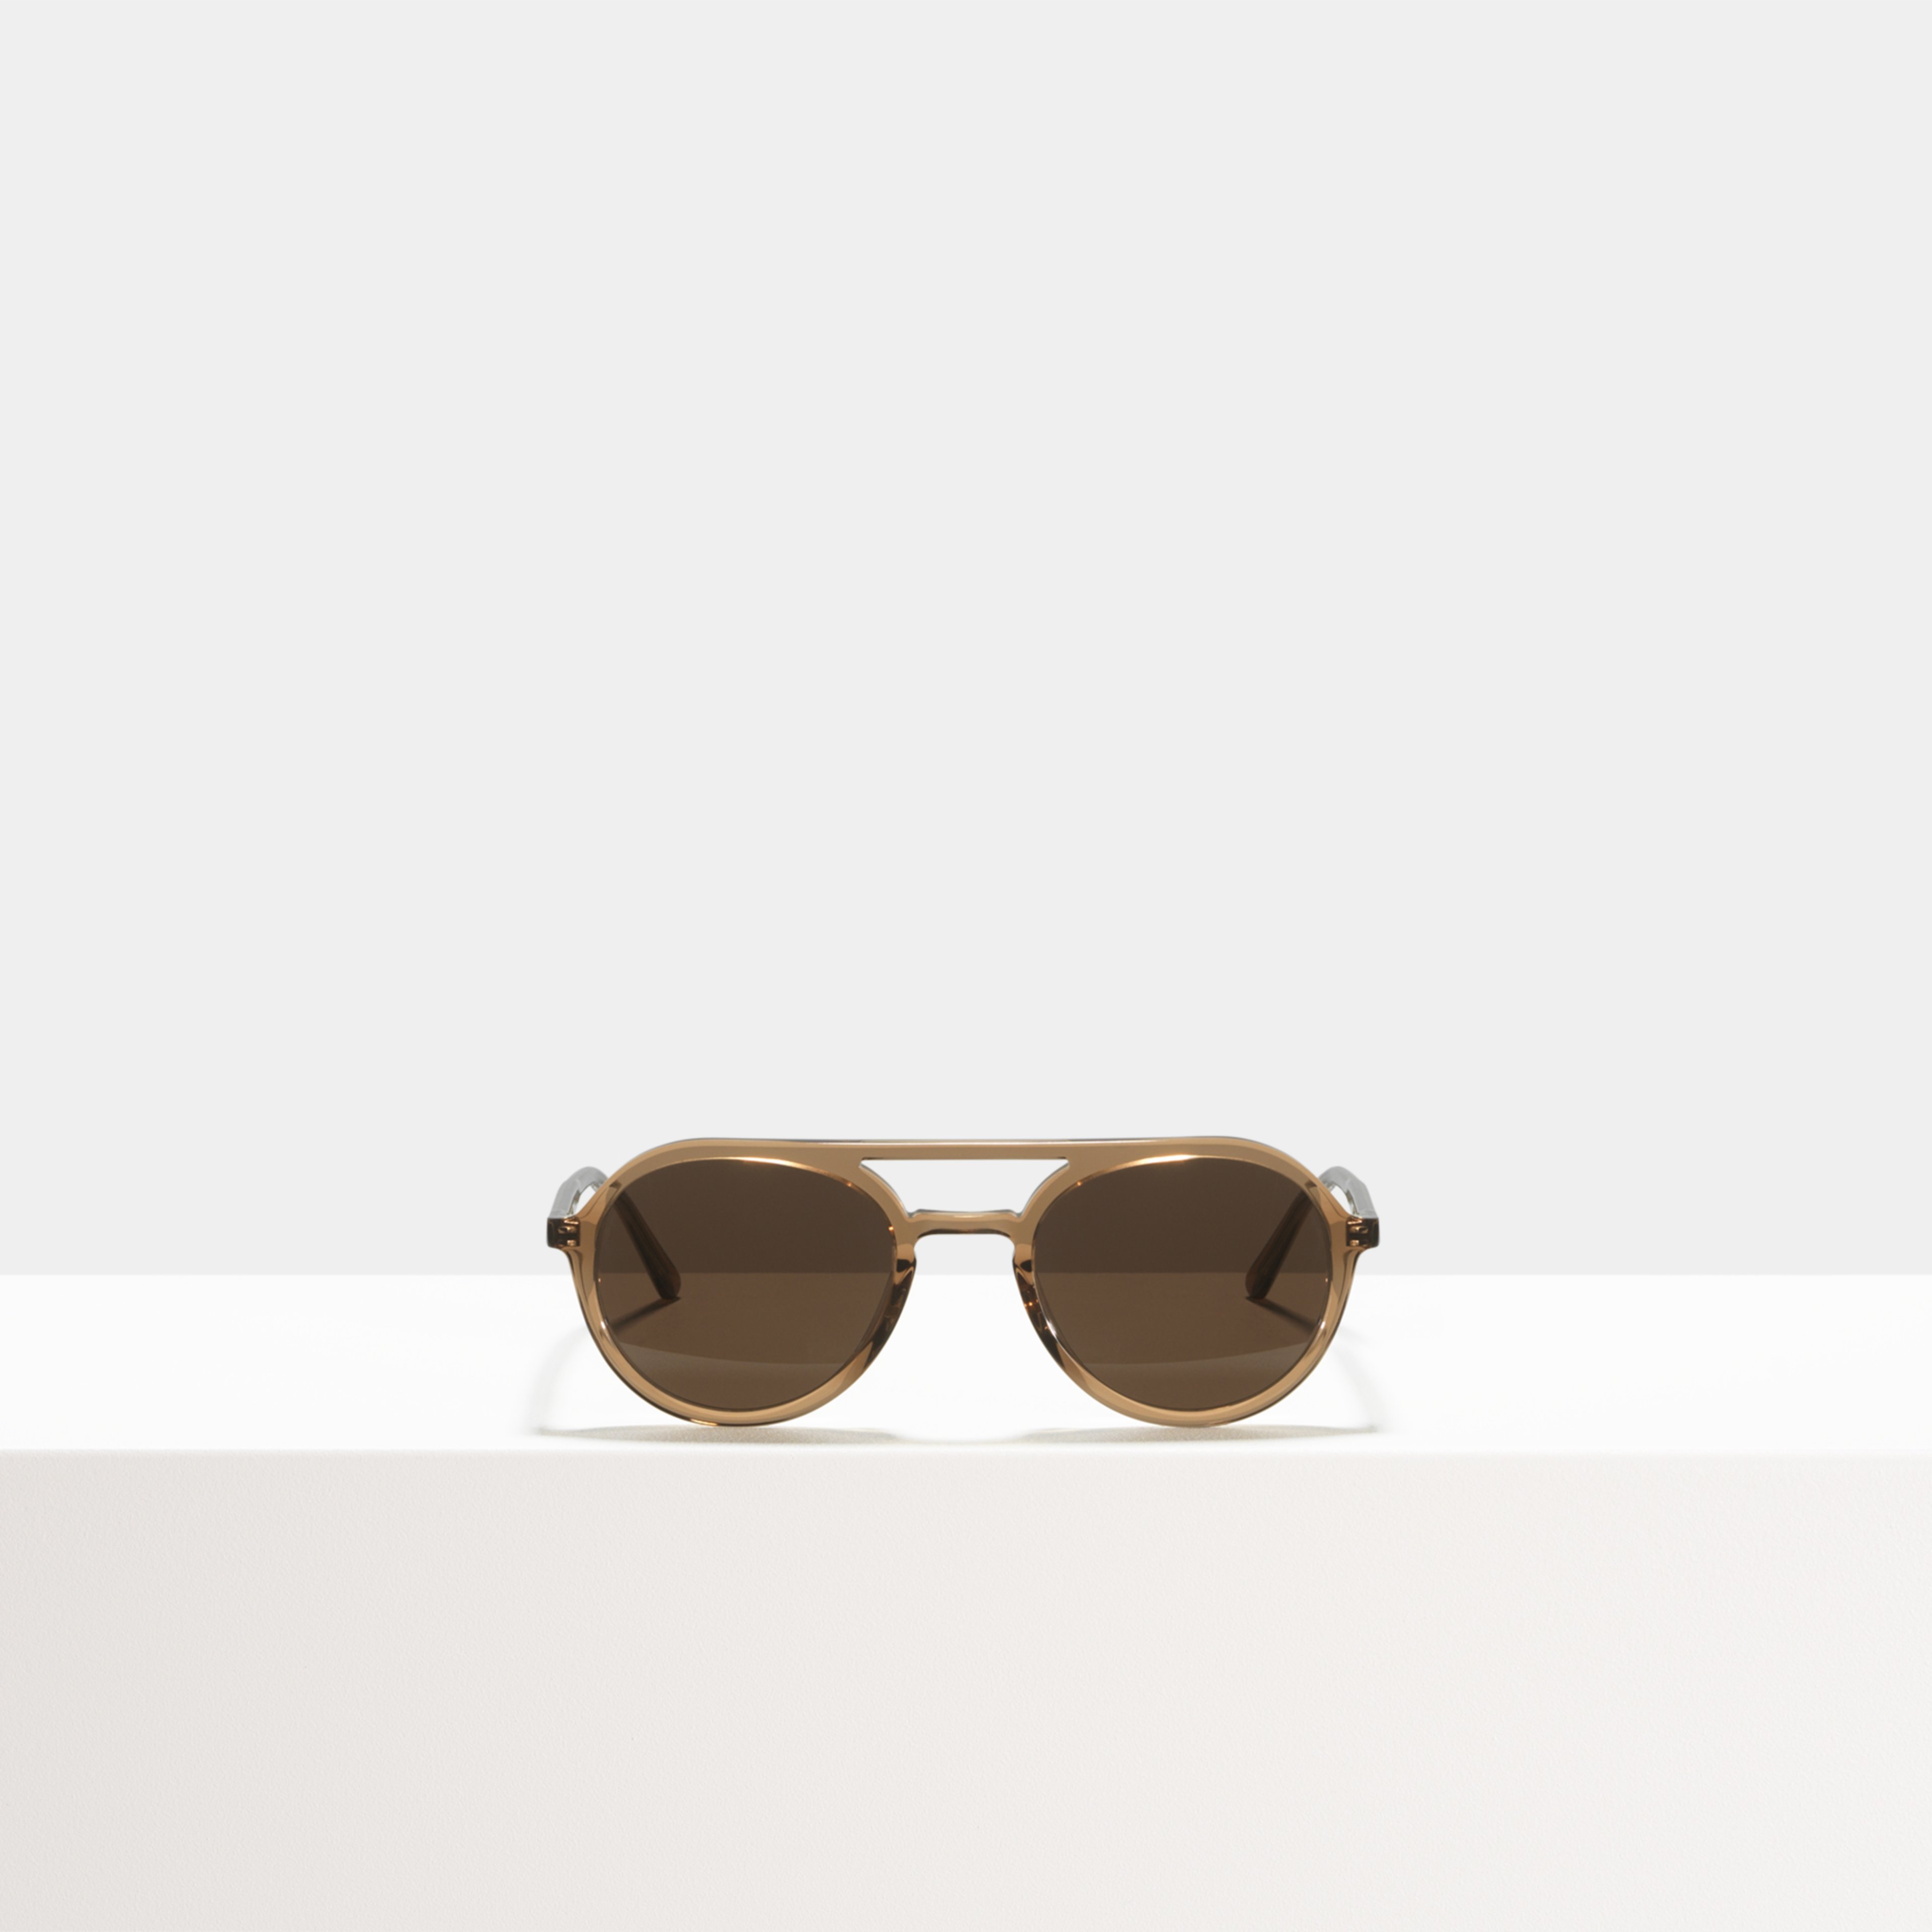 Ace & Tate Sunglasses |  Acetate in Brown